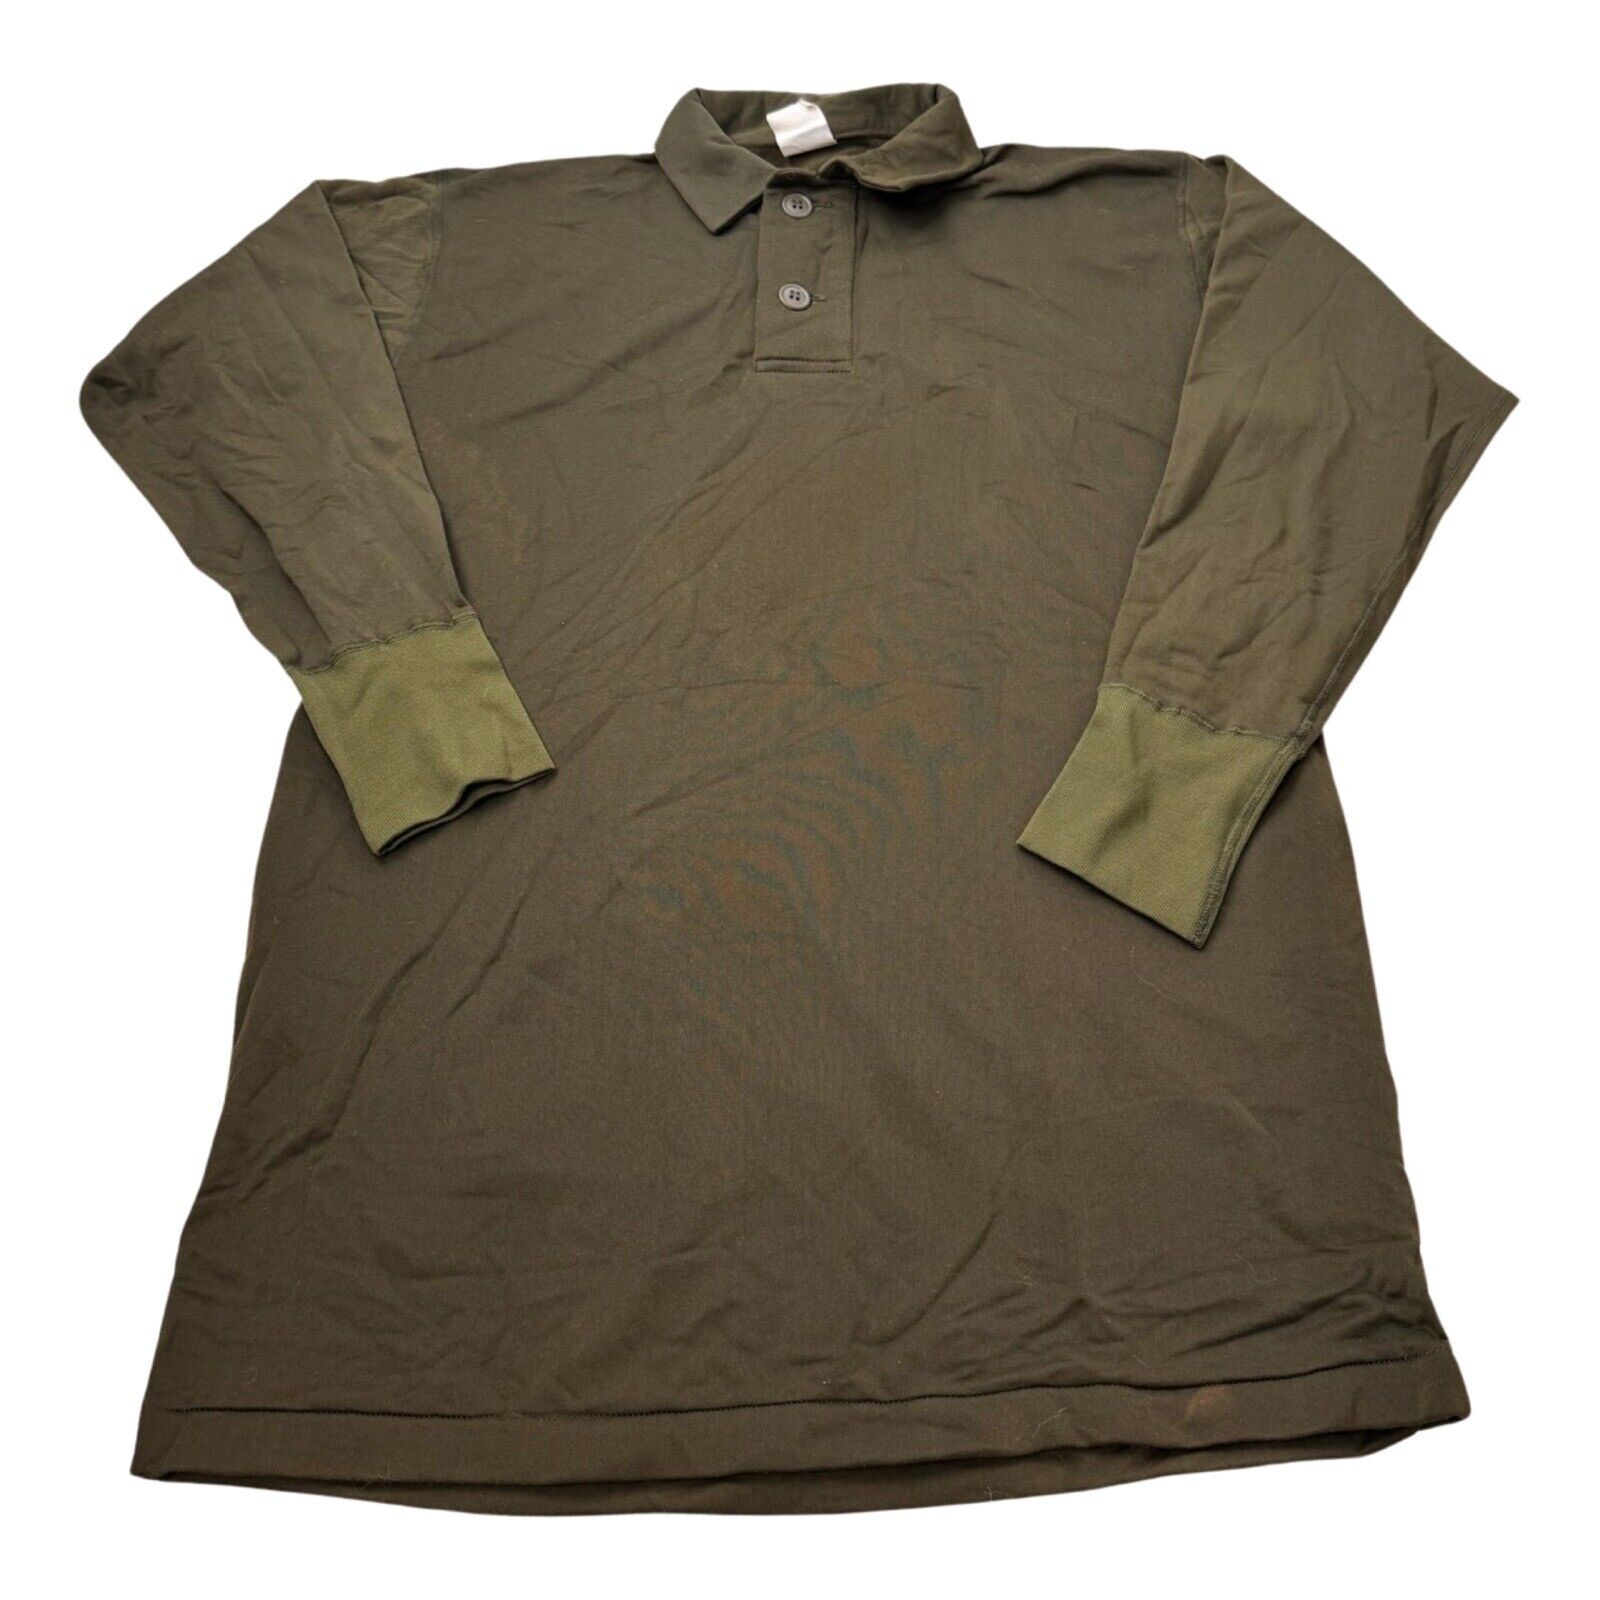 GENUINE 1969 US ARMY VIETNAM Sleeping Shirt OG-107 Size Small